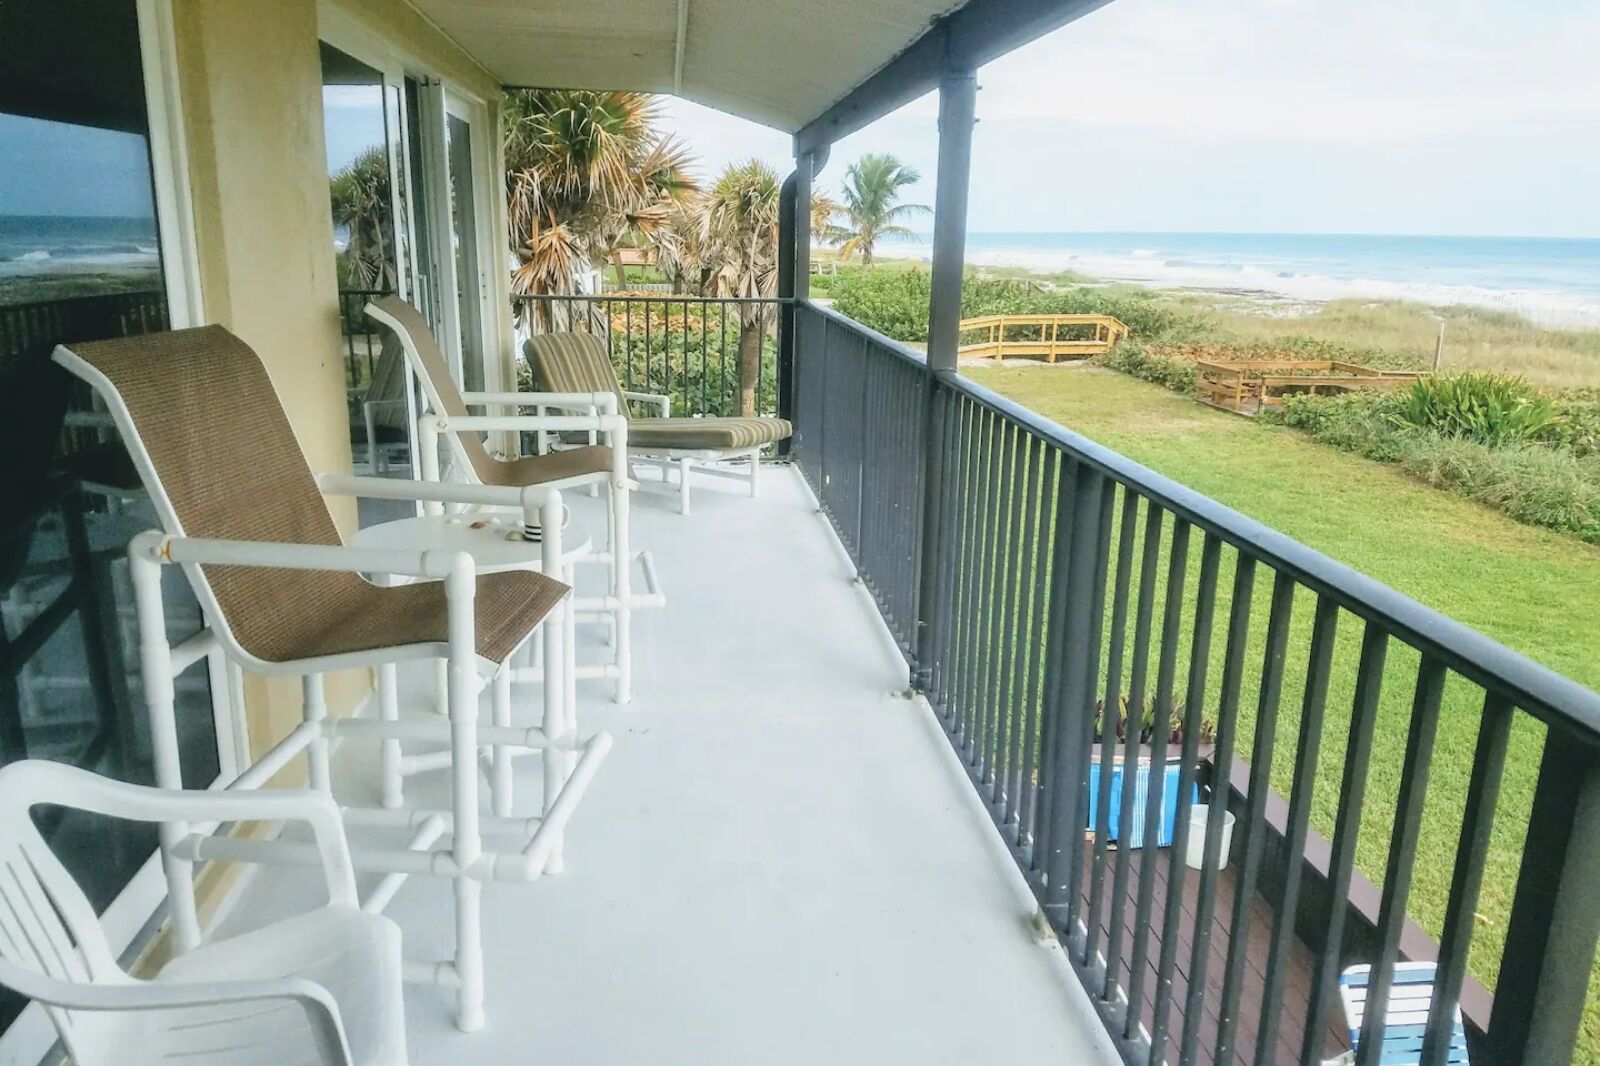 Balcony at Airbnb Cocoa Beach rental 